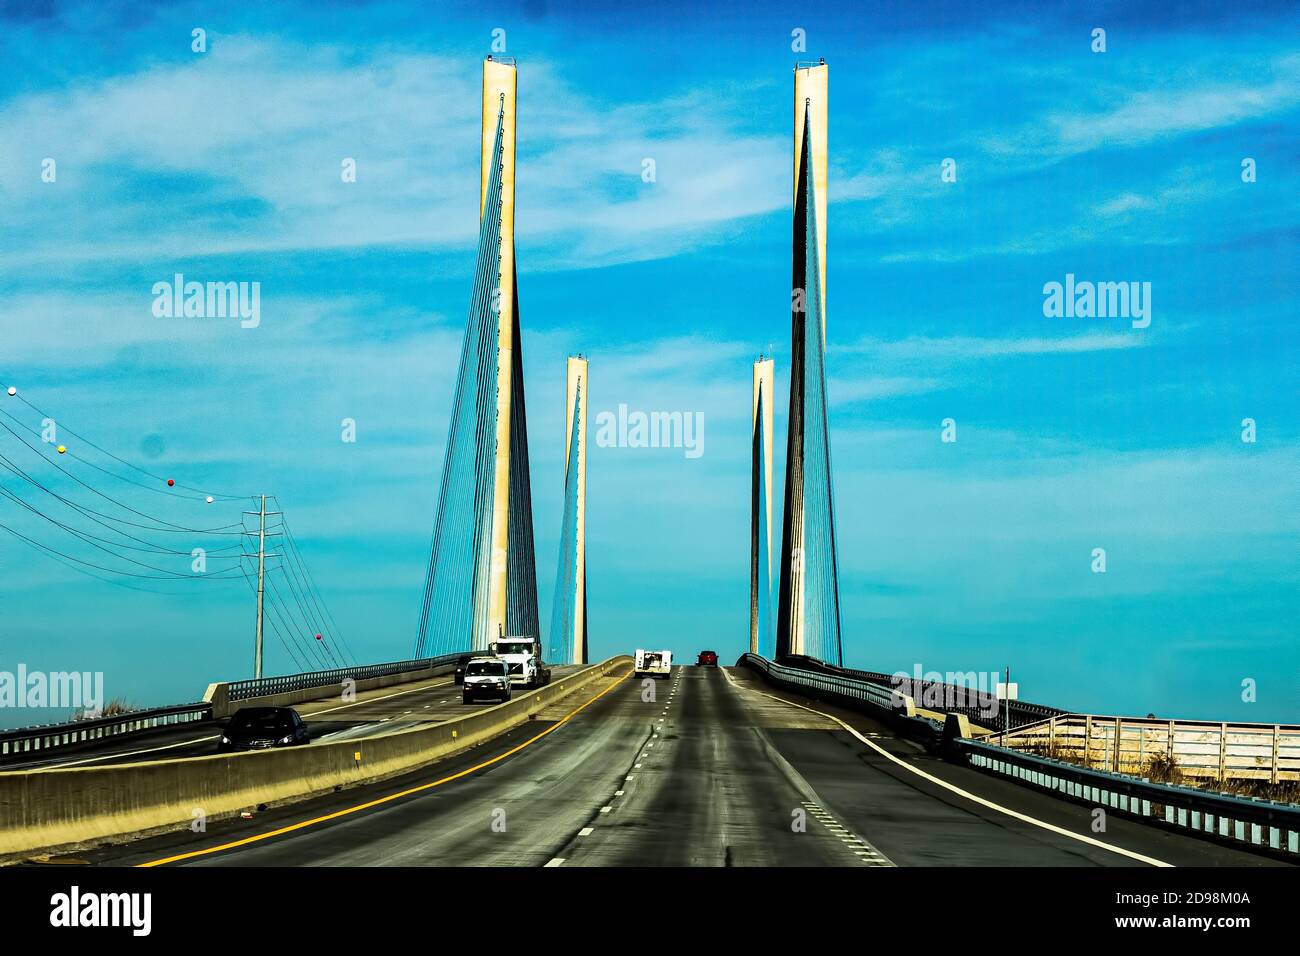 nasa images of indian river bridge